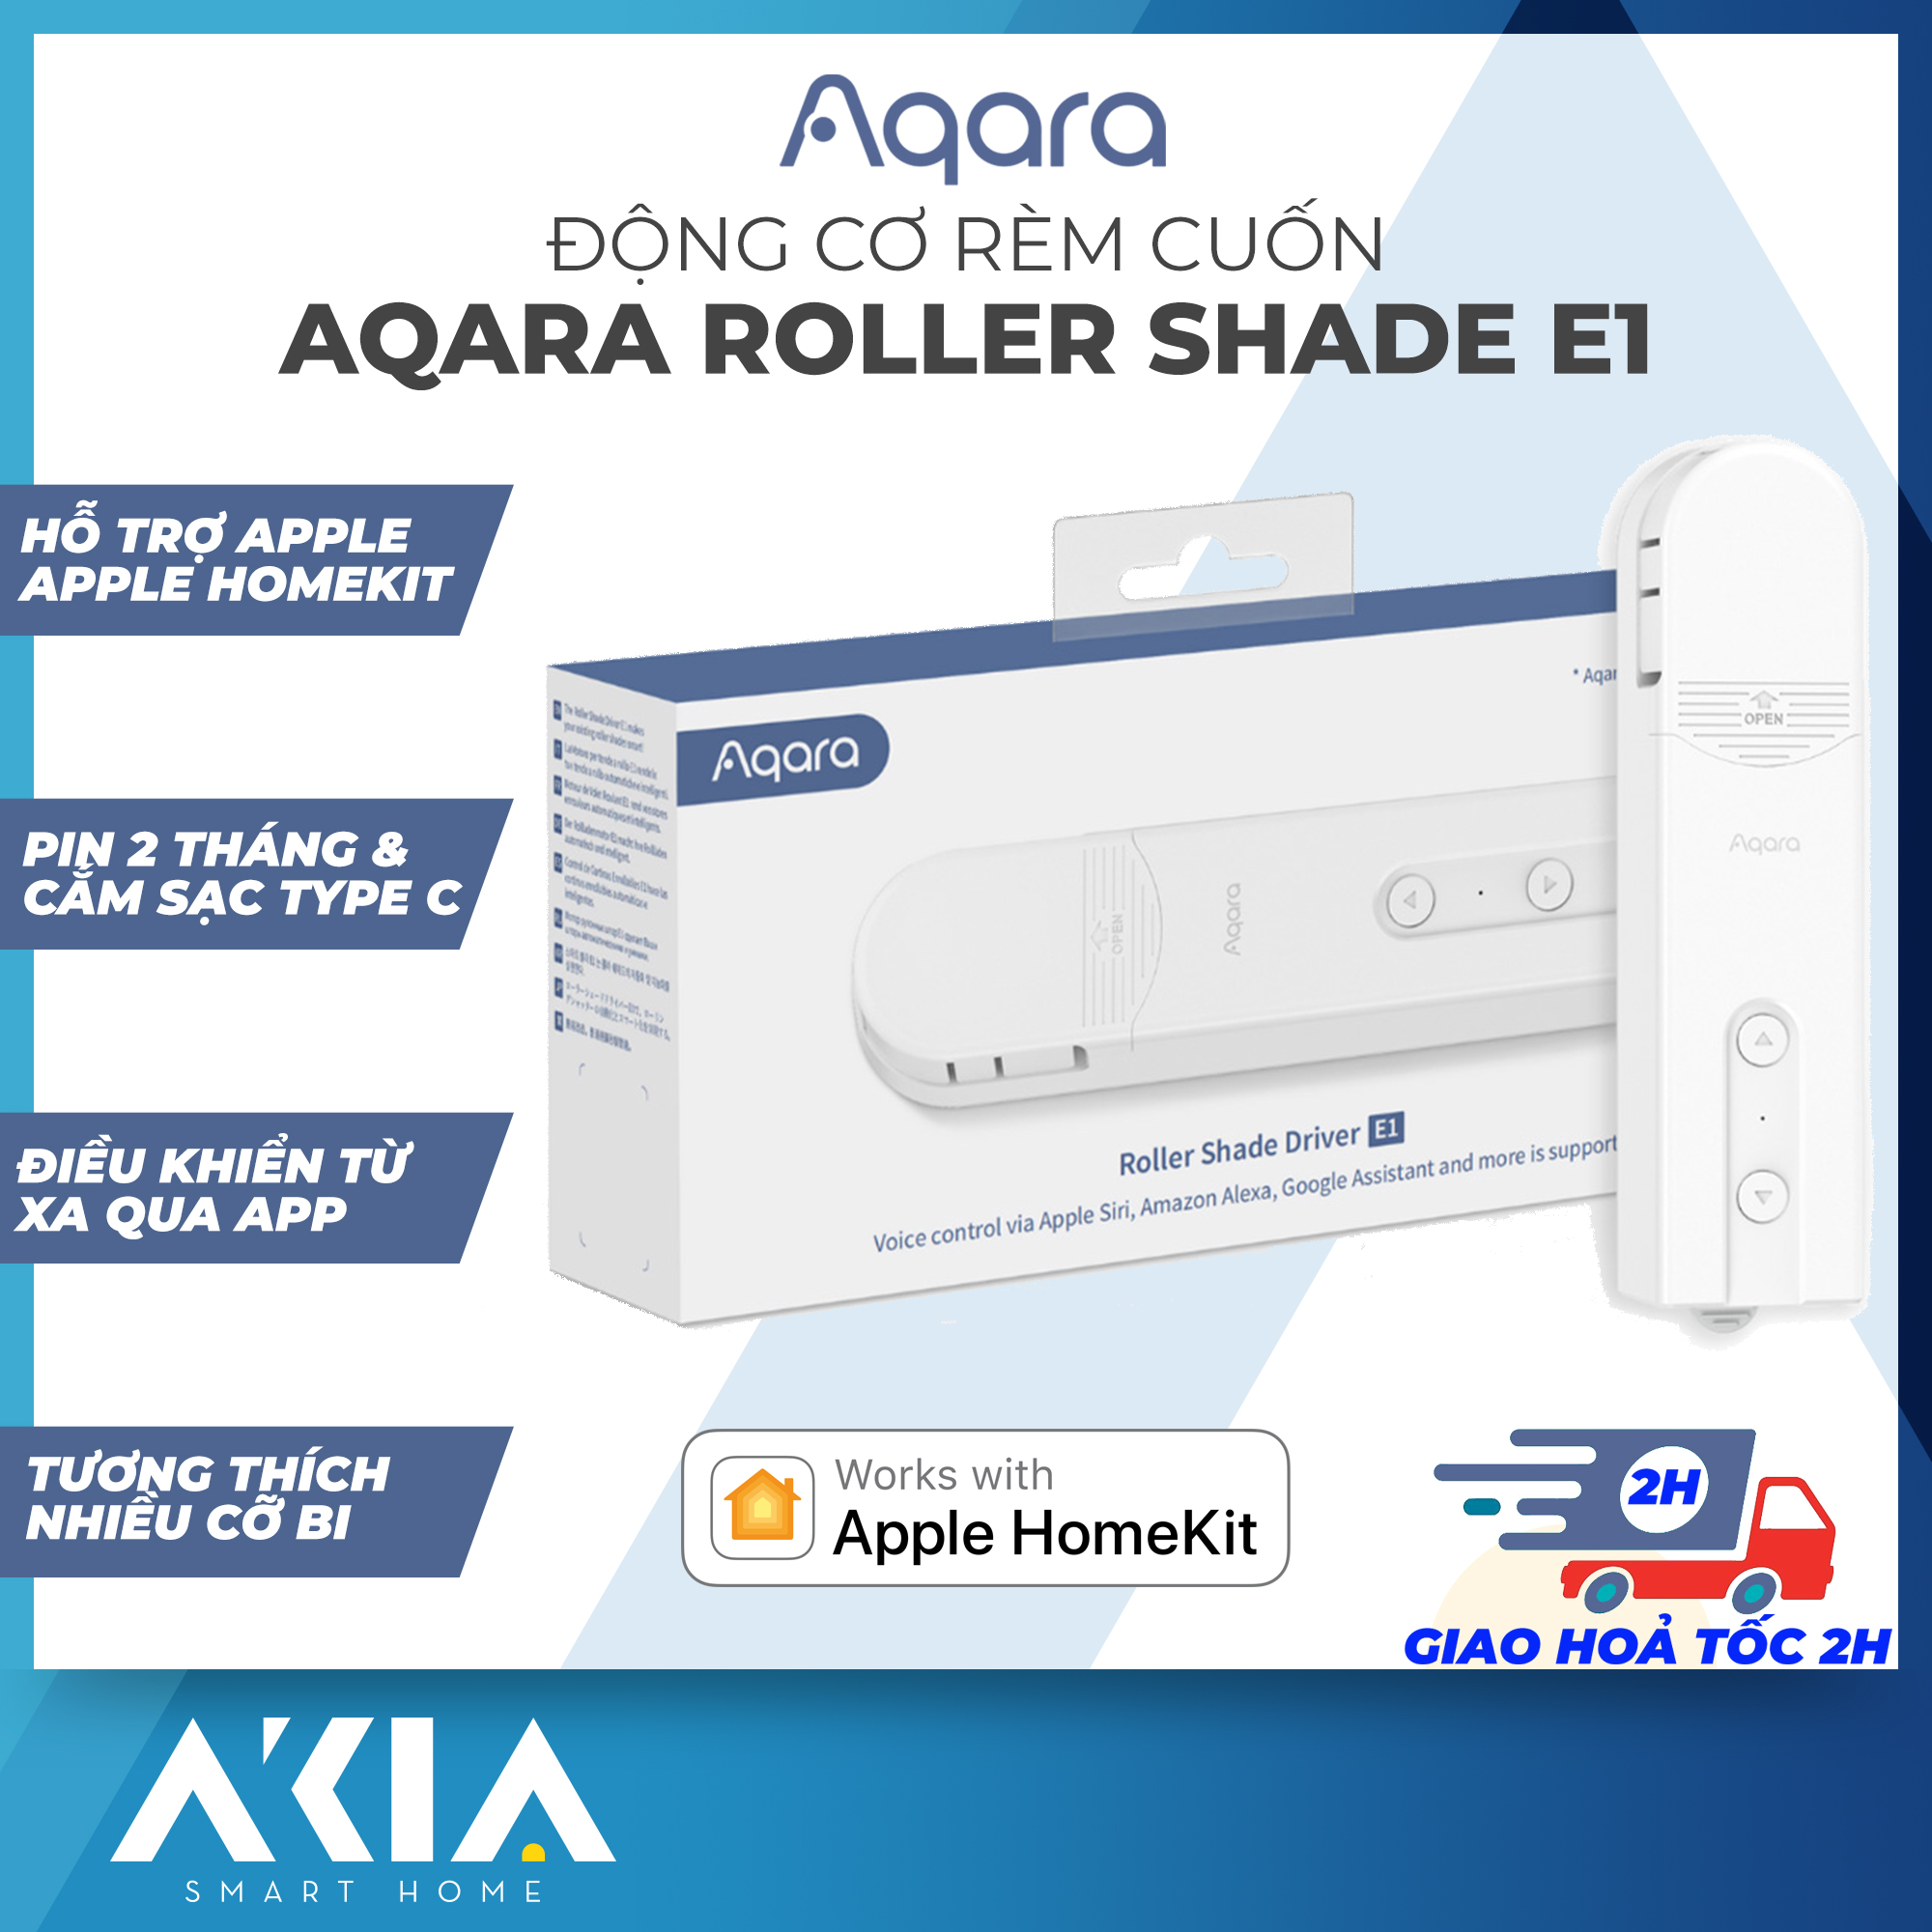 Aqara Roller Shade Driver E1